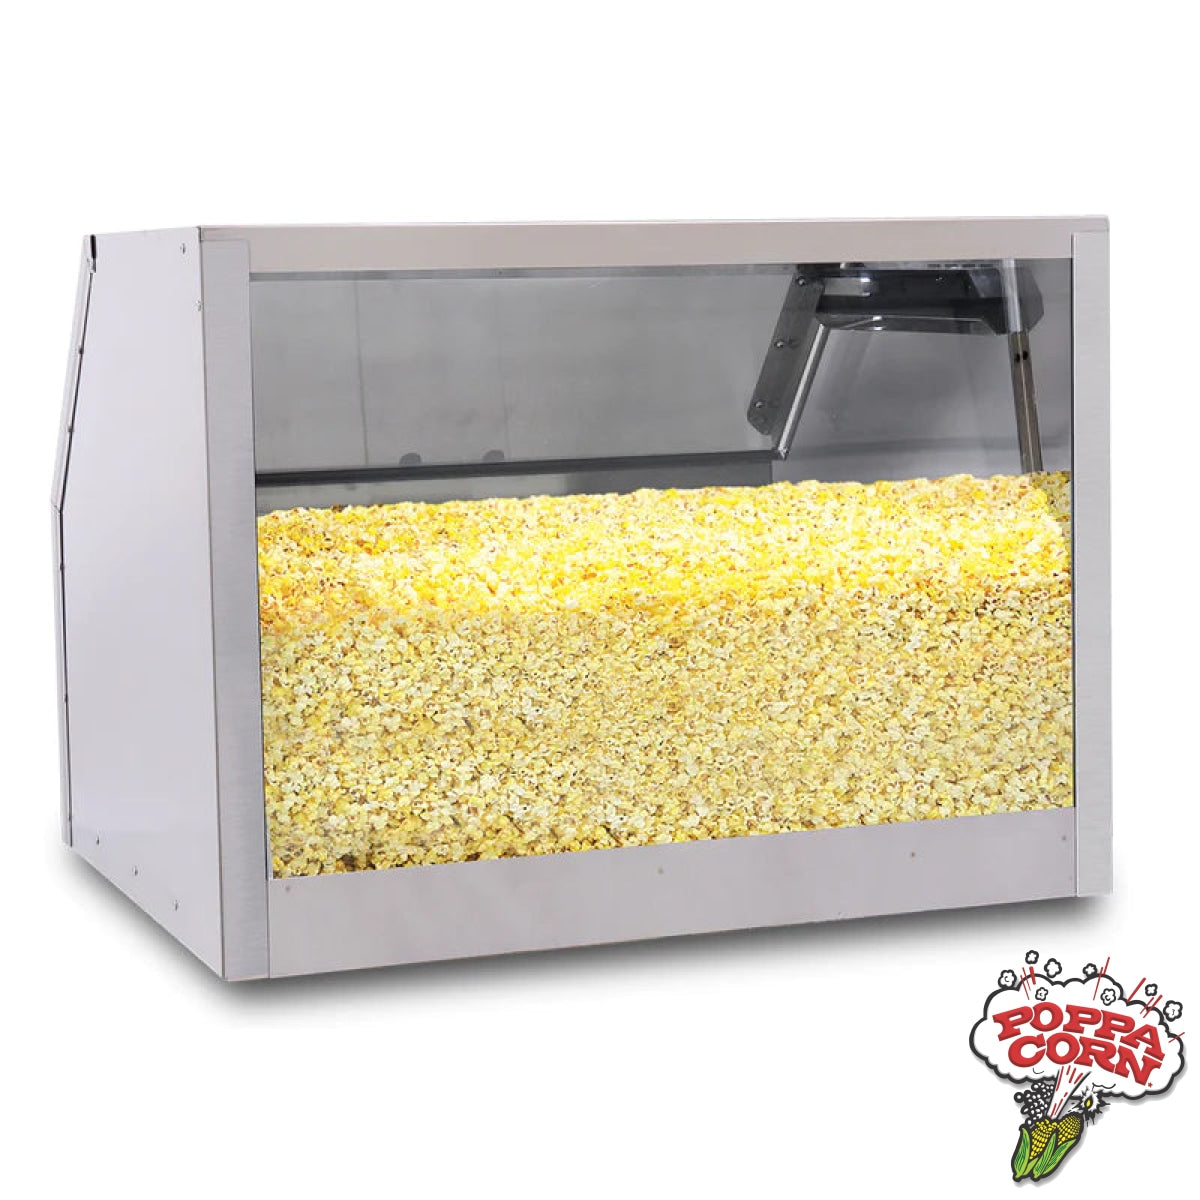 30" Main Street Elite Counter Popcorn Staging Cabinet - GM2686-00-000 - Poppa Corn Corp